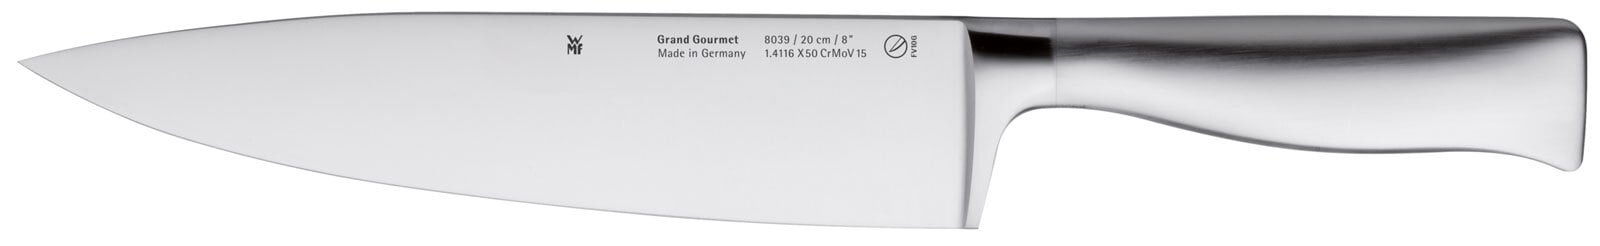 WMF Messer-Set GRAND GOURMET 3-teilig Edelstahl silberfarbig